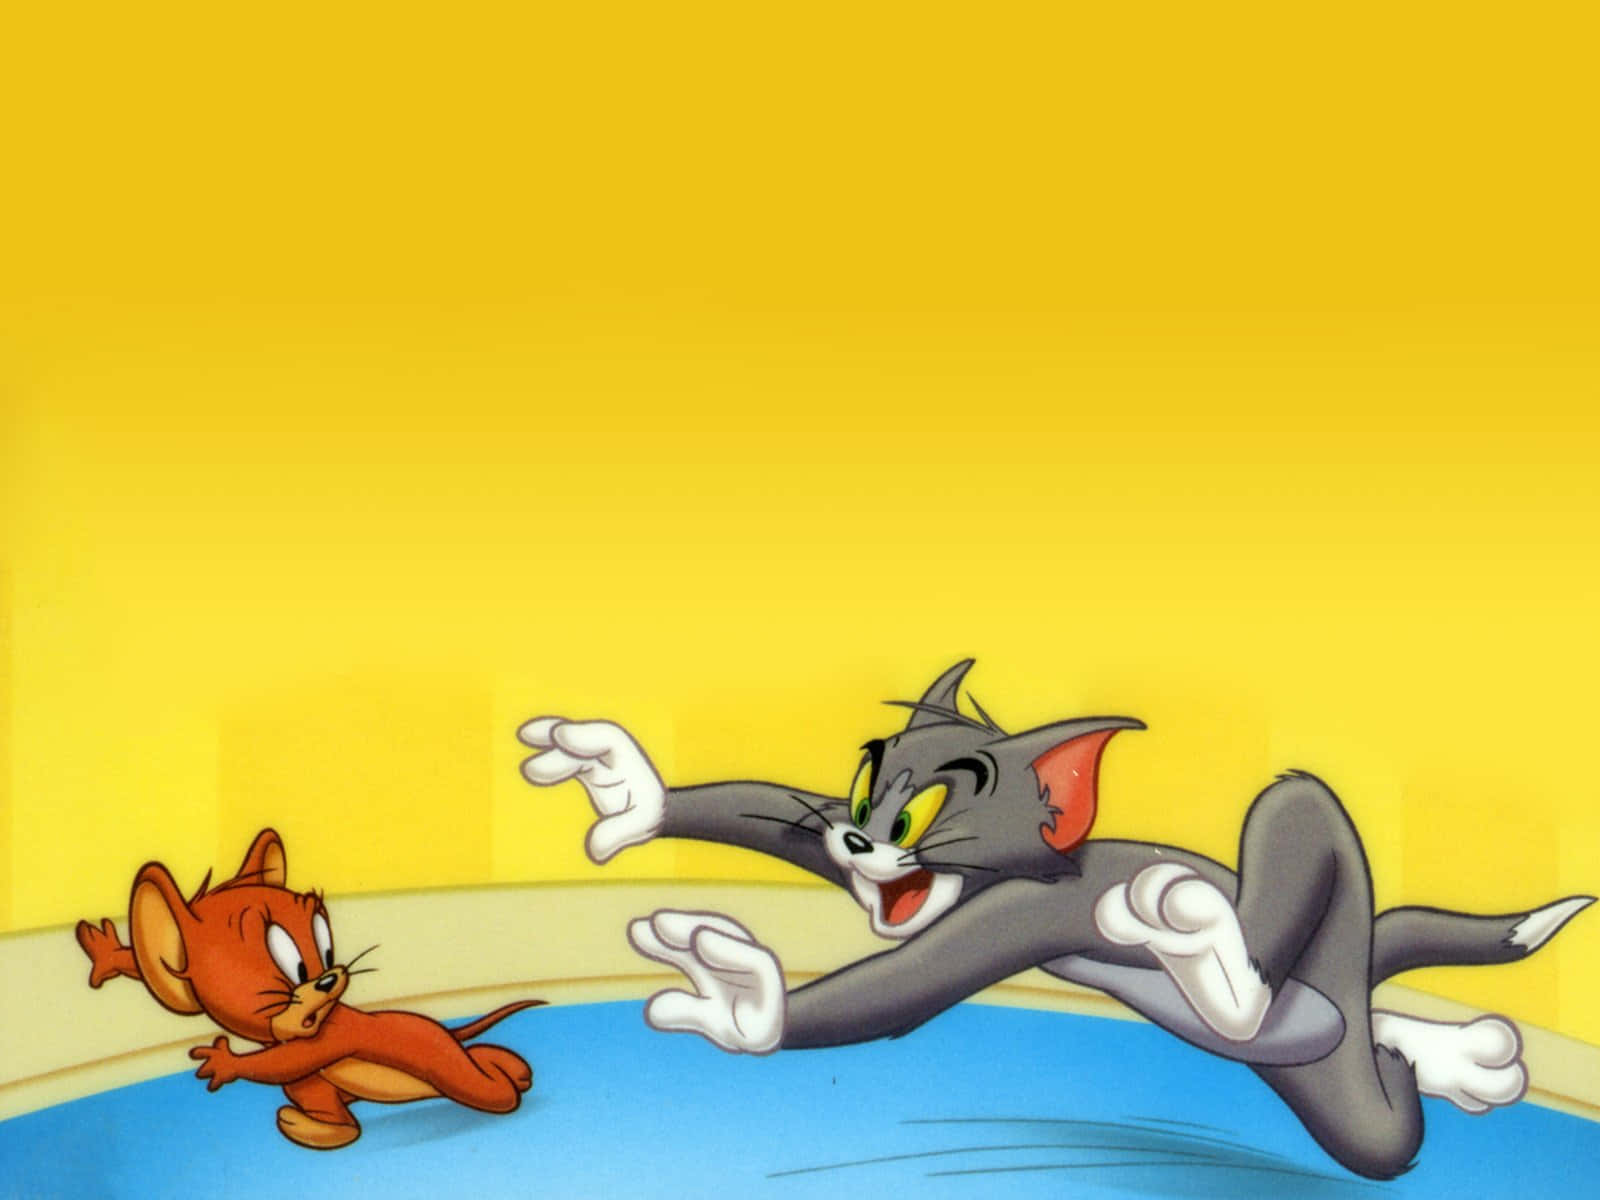 Tom og Jerry tager en forlystelsestur i en rutschebane. Wallpaper